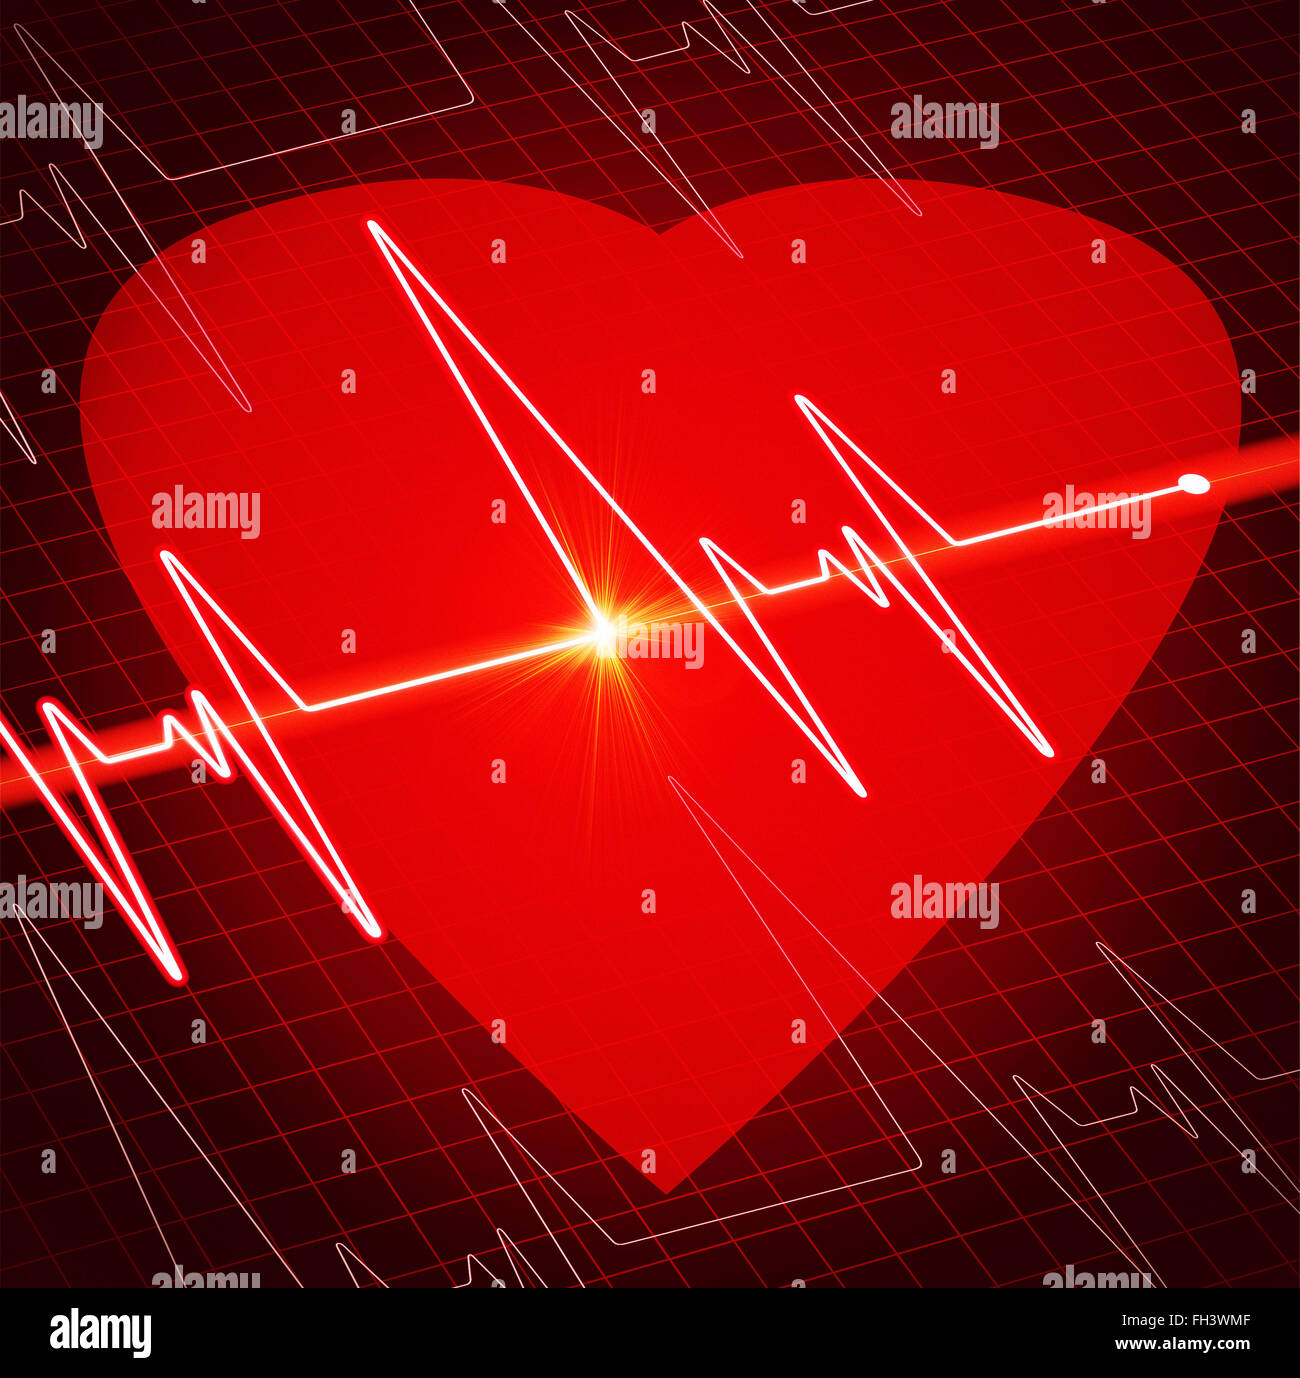 Leggere la frequenza cardiaca cardiogram Foto Stock